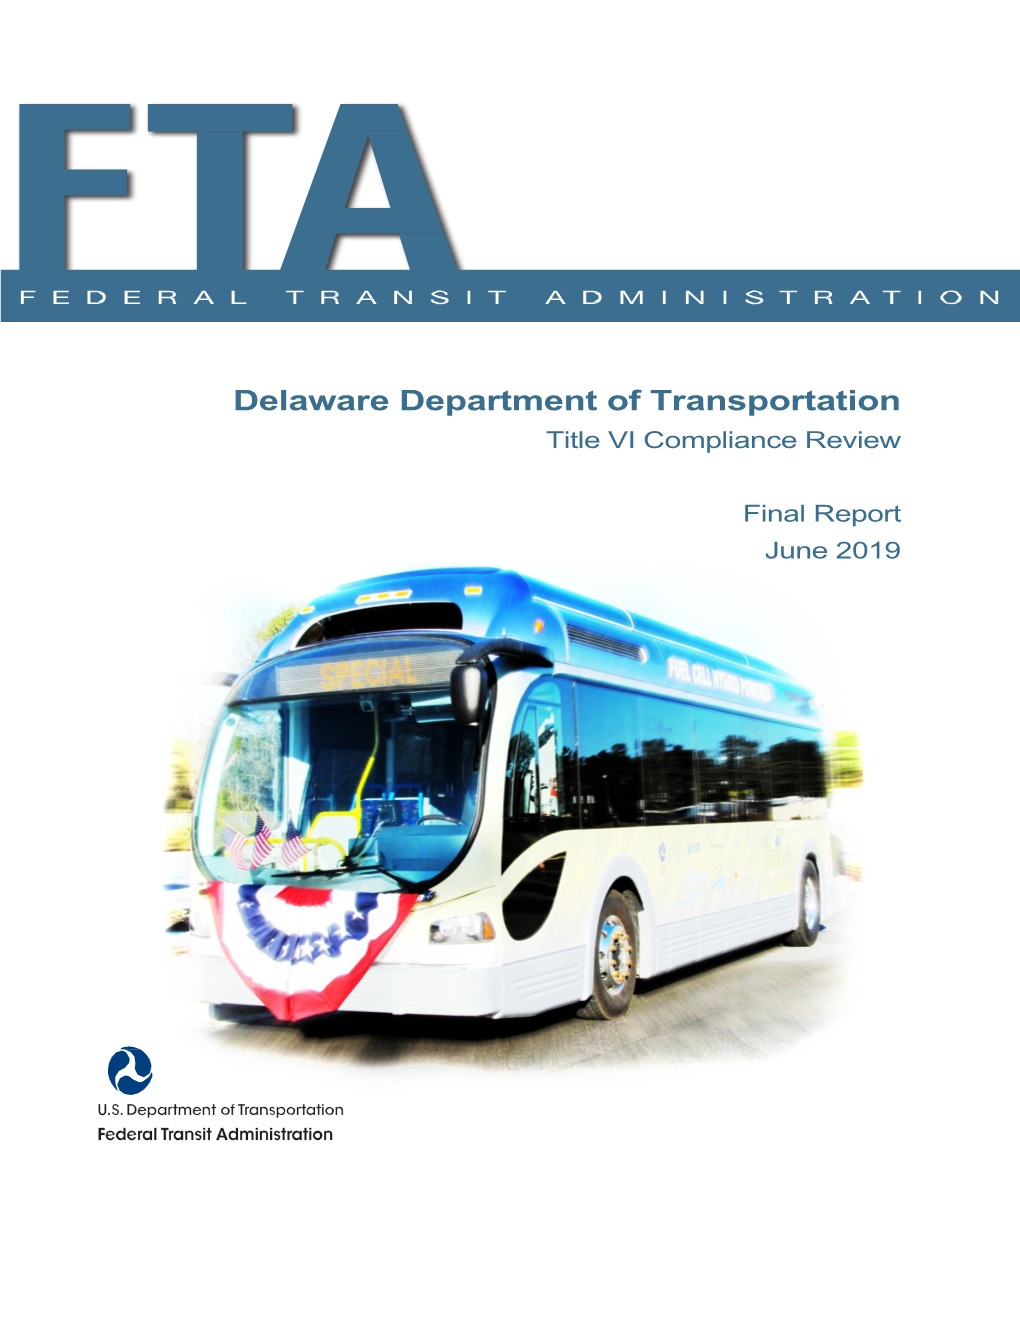 Delaware Department of Transportation Final Title VI Review